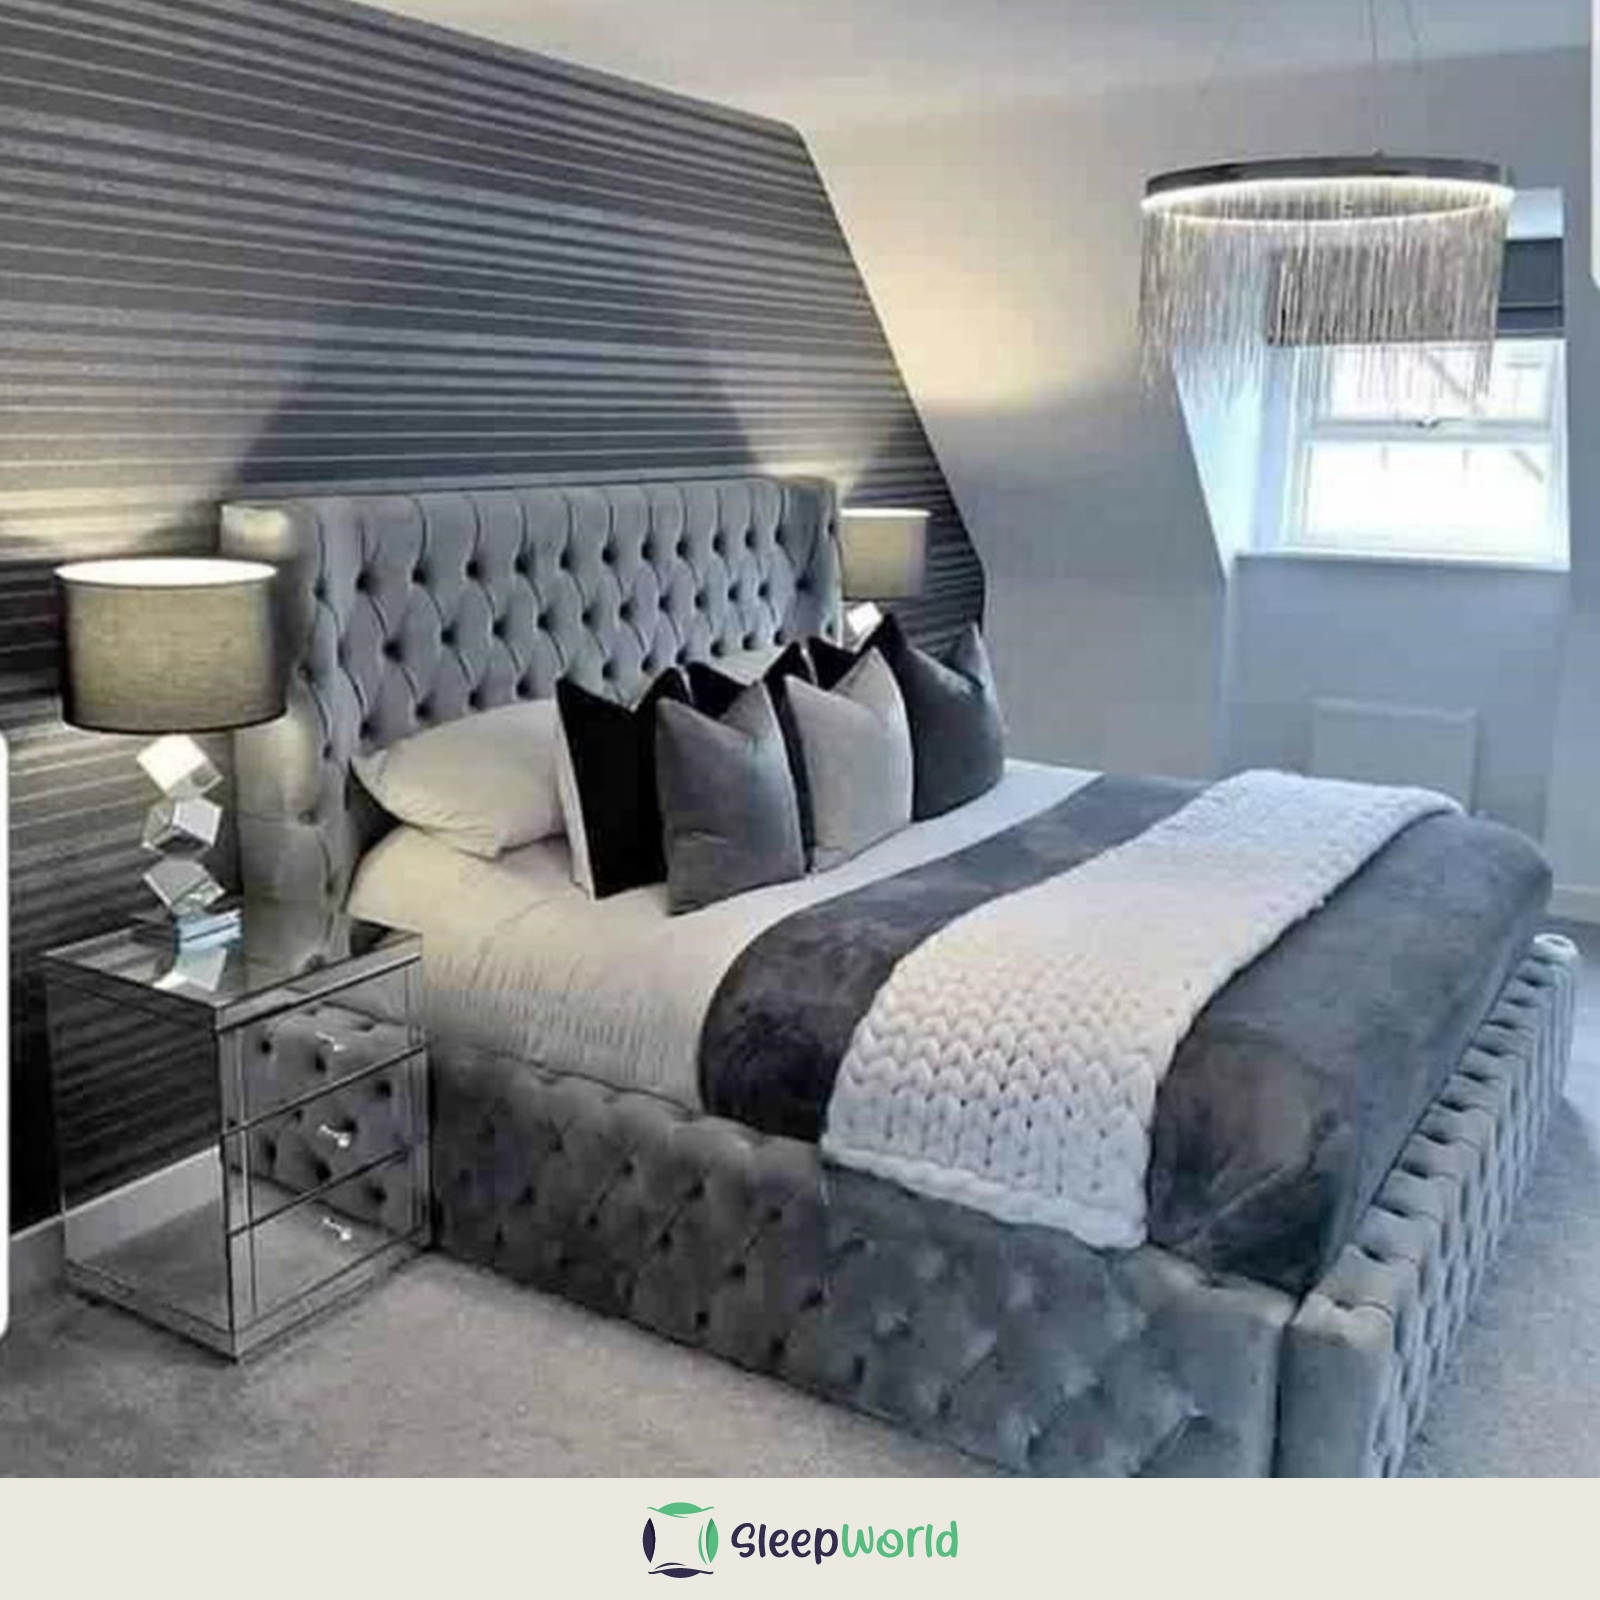 Ambassador Bed – Small Double – 4FT – Gas Lift Ottoman Base – Optional Mattress – Upholstered – Sleep World Furniture